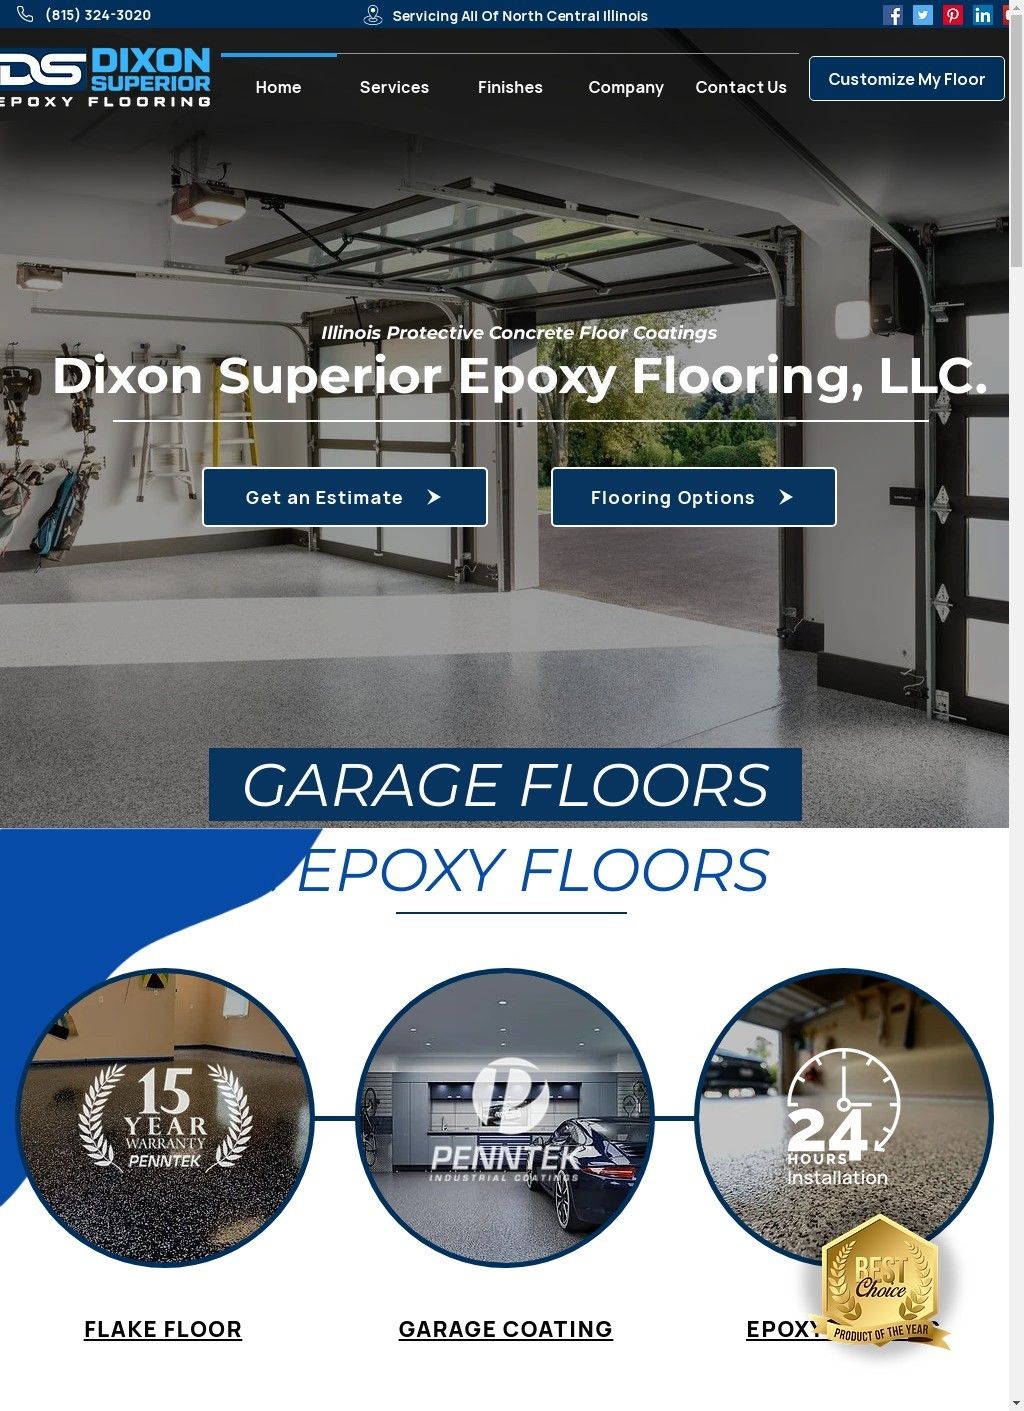 Dixon Superior Epoxy Flooring